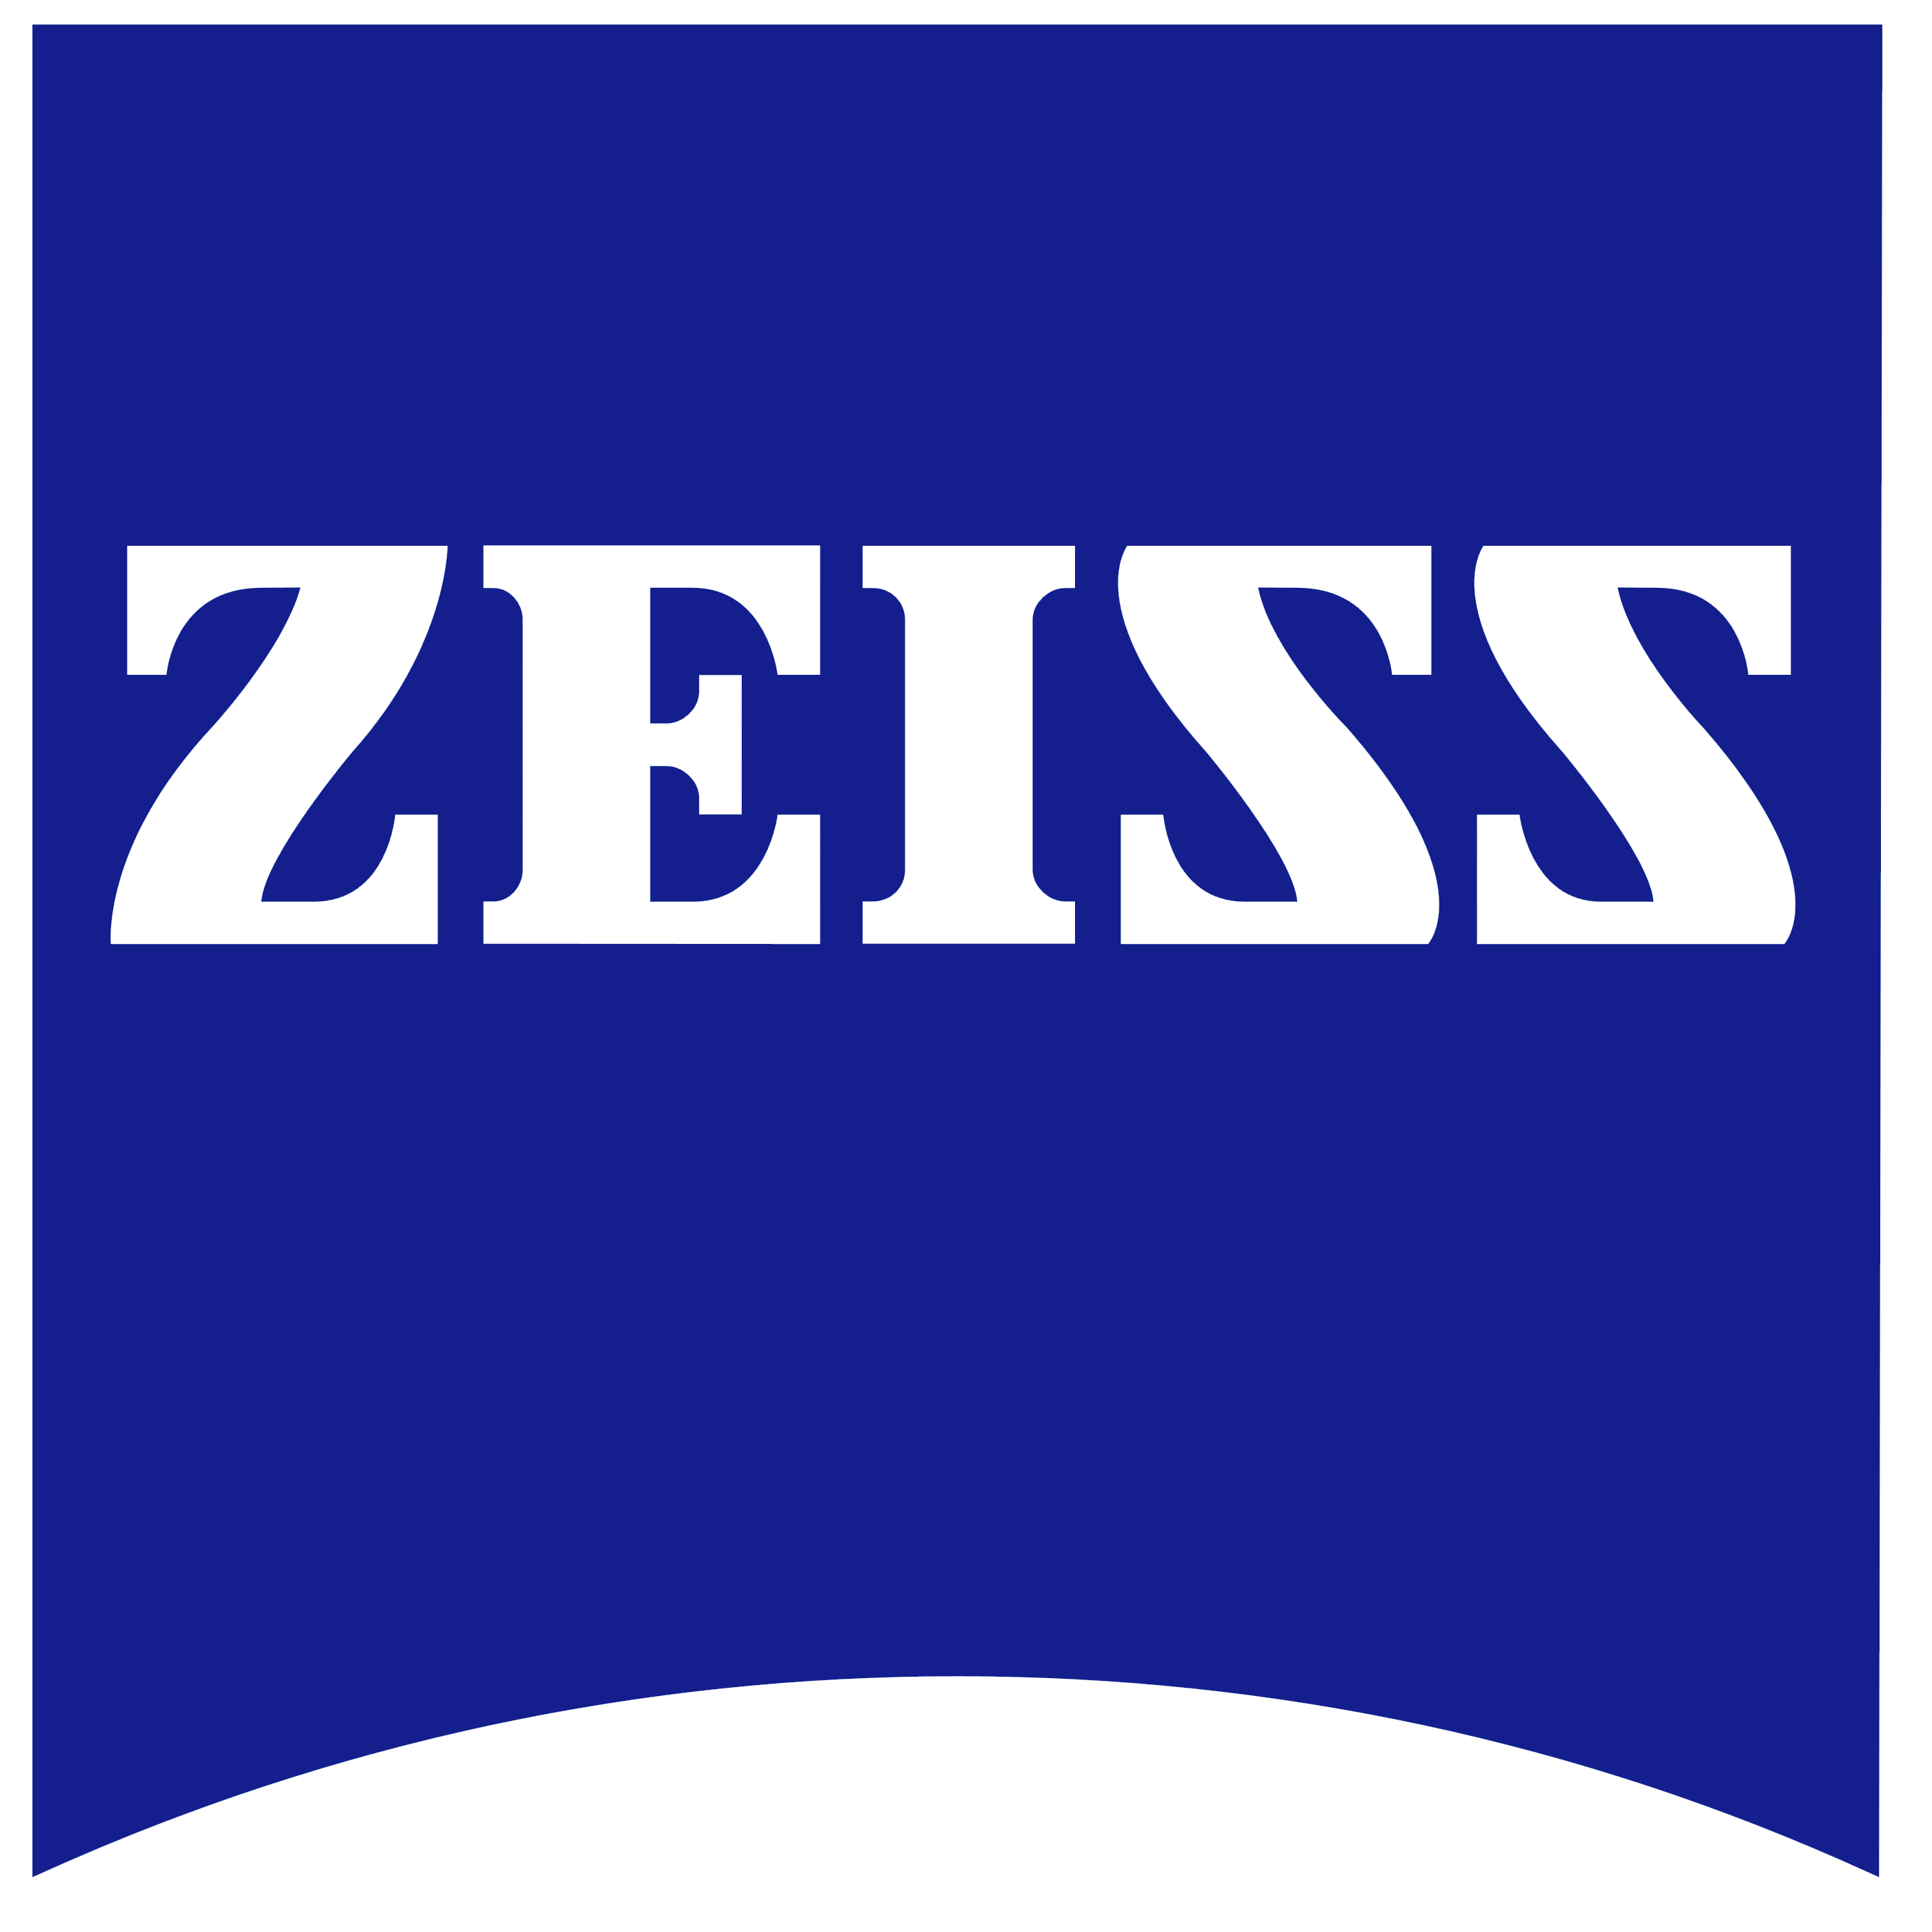 Carl Zeiss logo. Some logos a